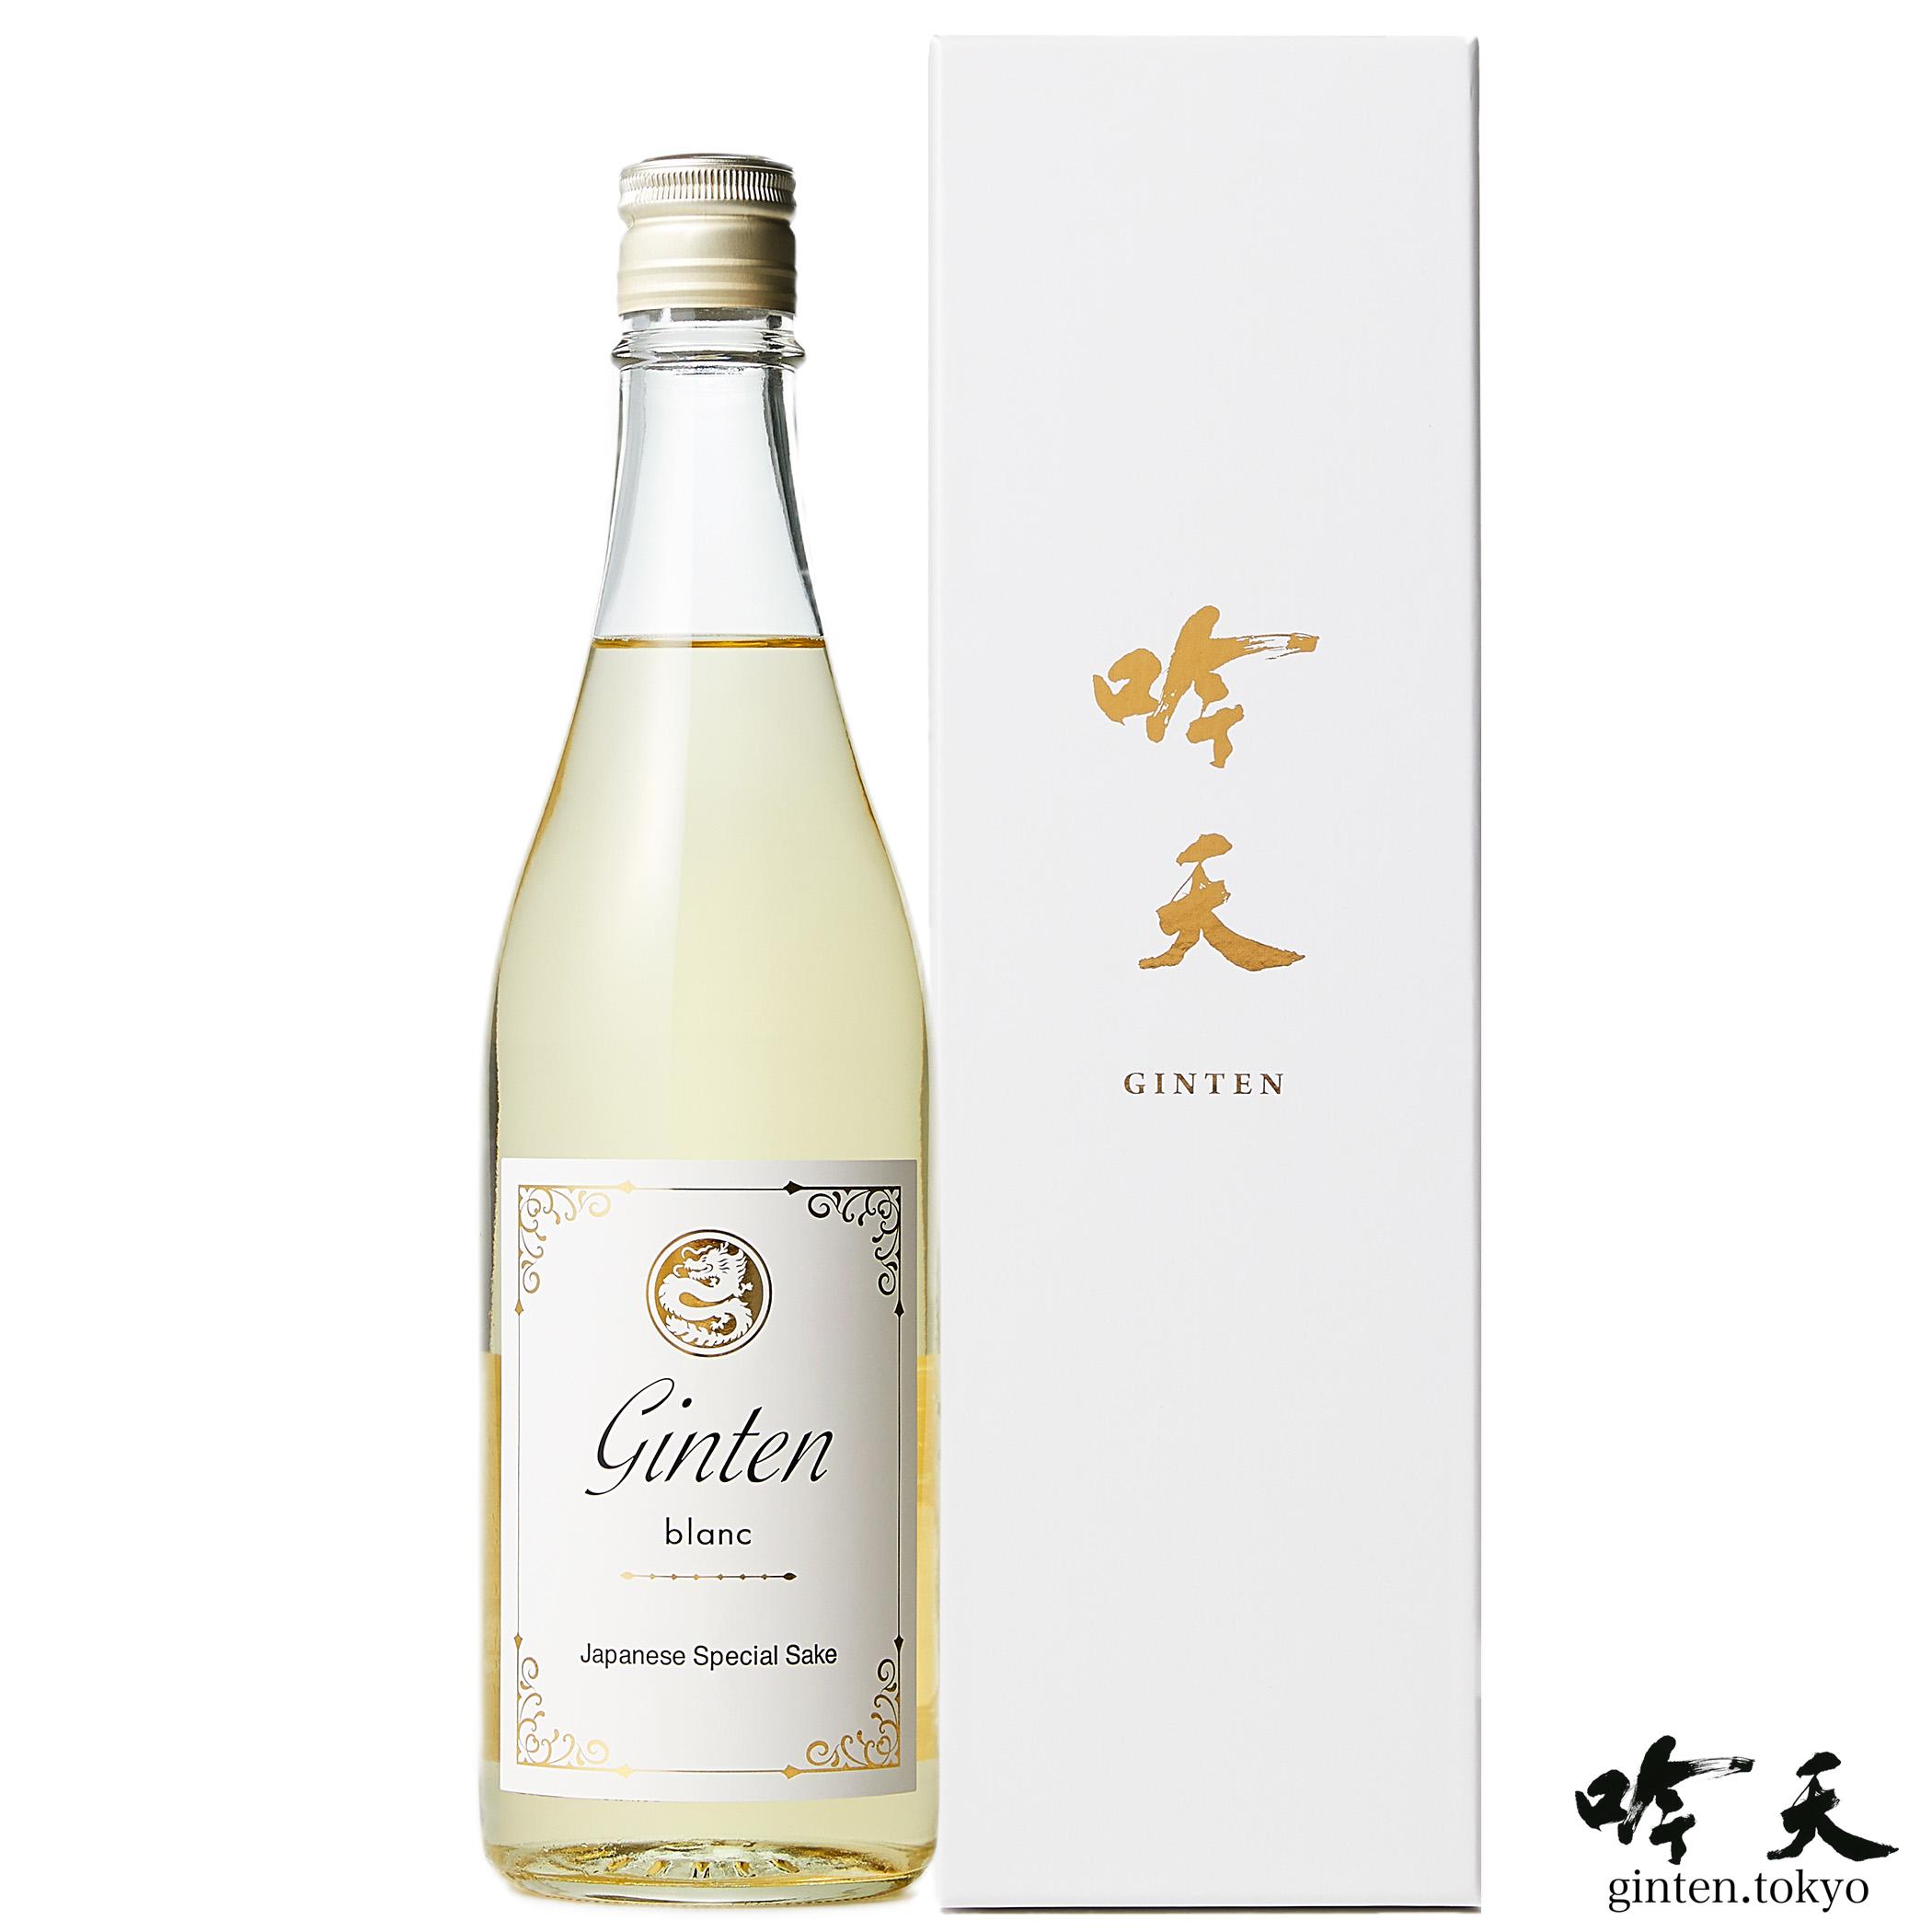 GINTEN blanc 2021 純米吟醸 (箱入) (720ml)